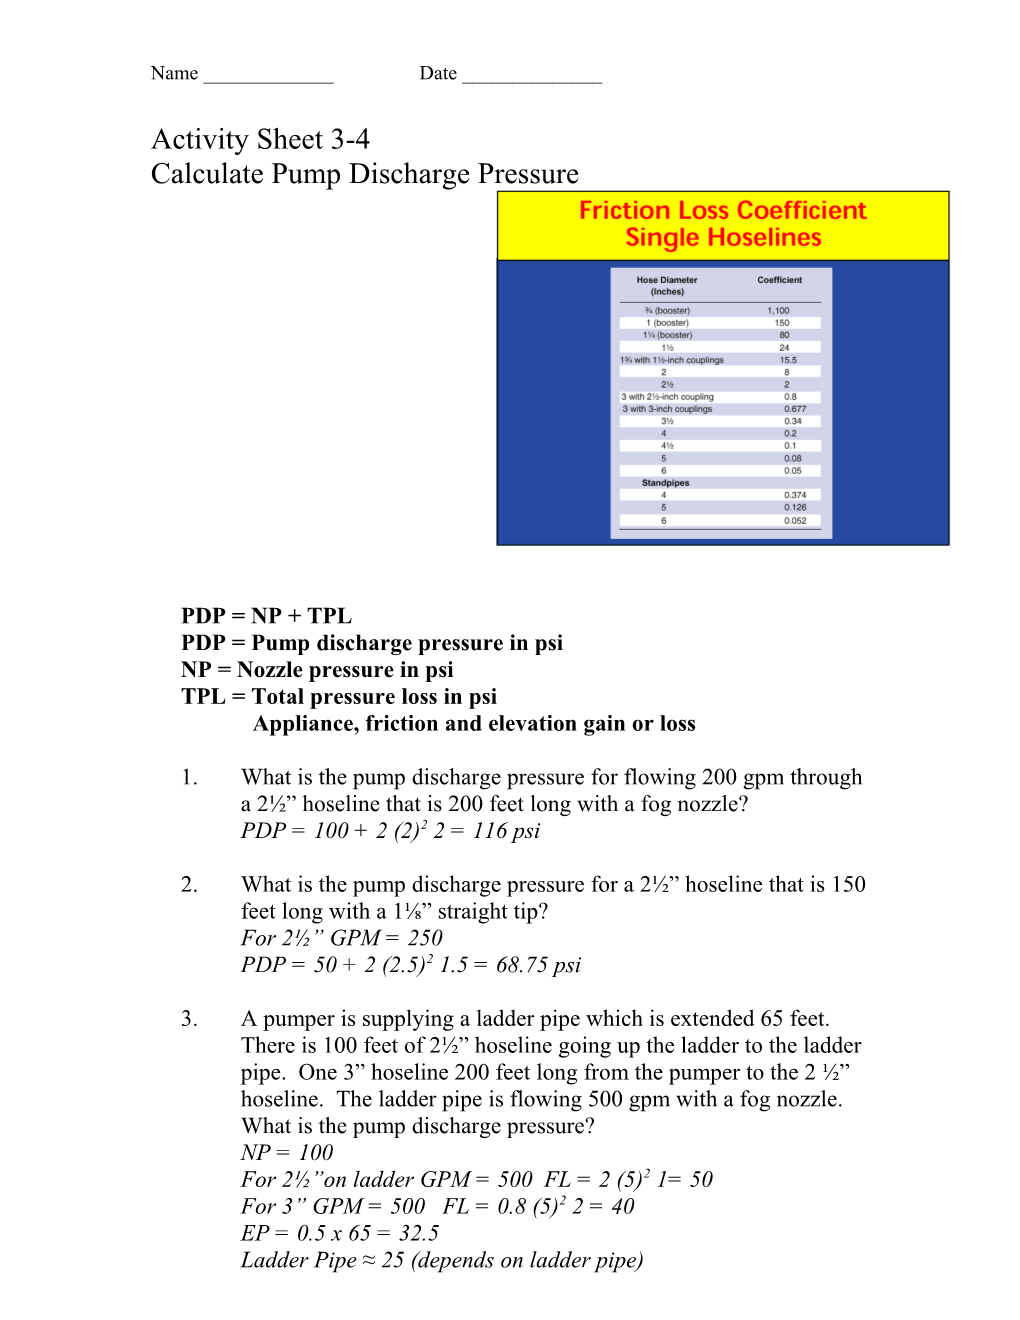 PDP= Pump Discharge Pressure in Psi